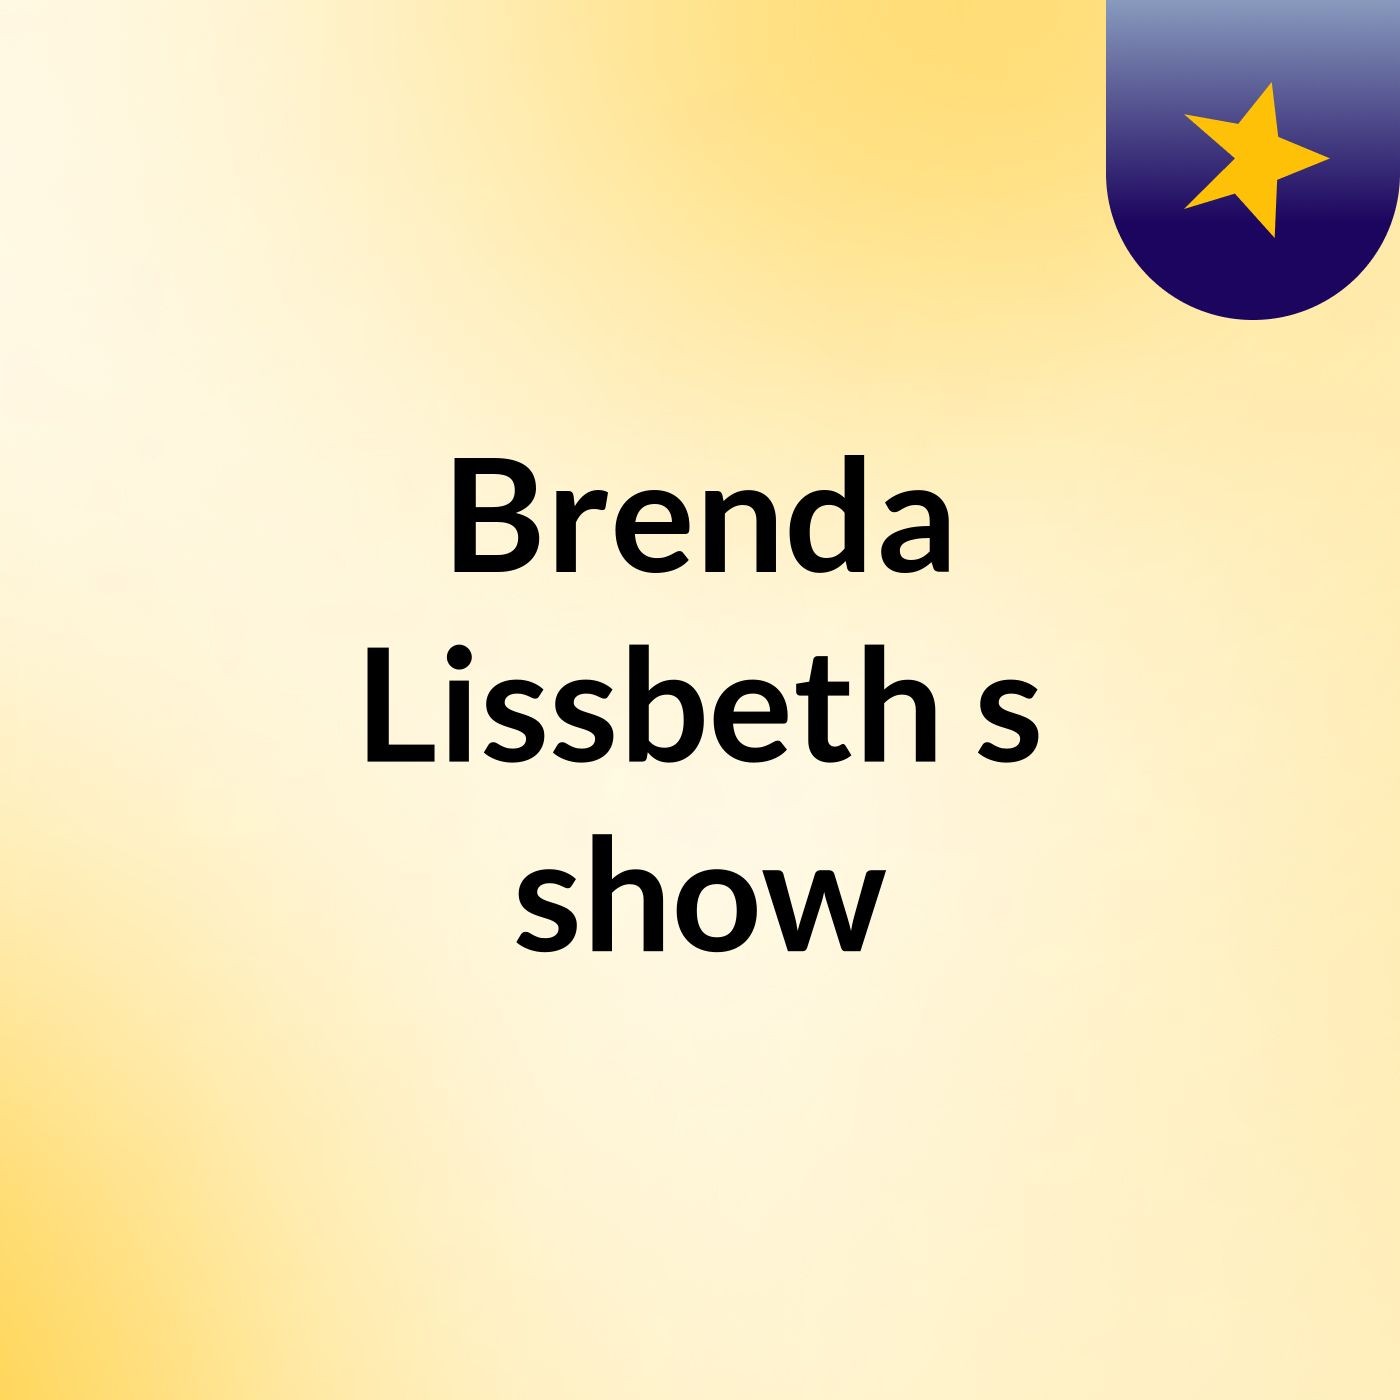 Brenda Lissbeth's show